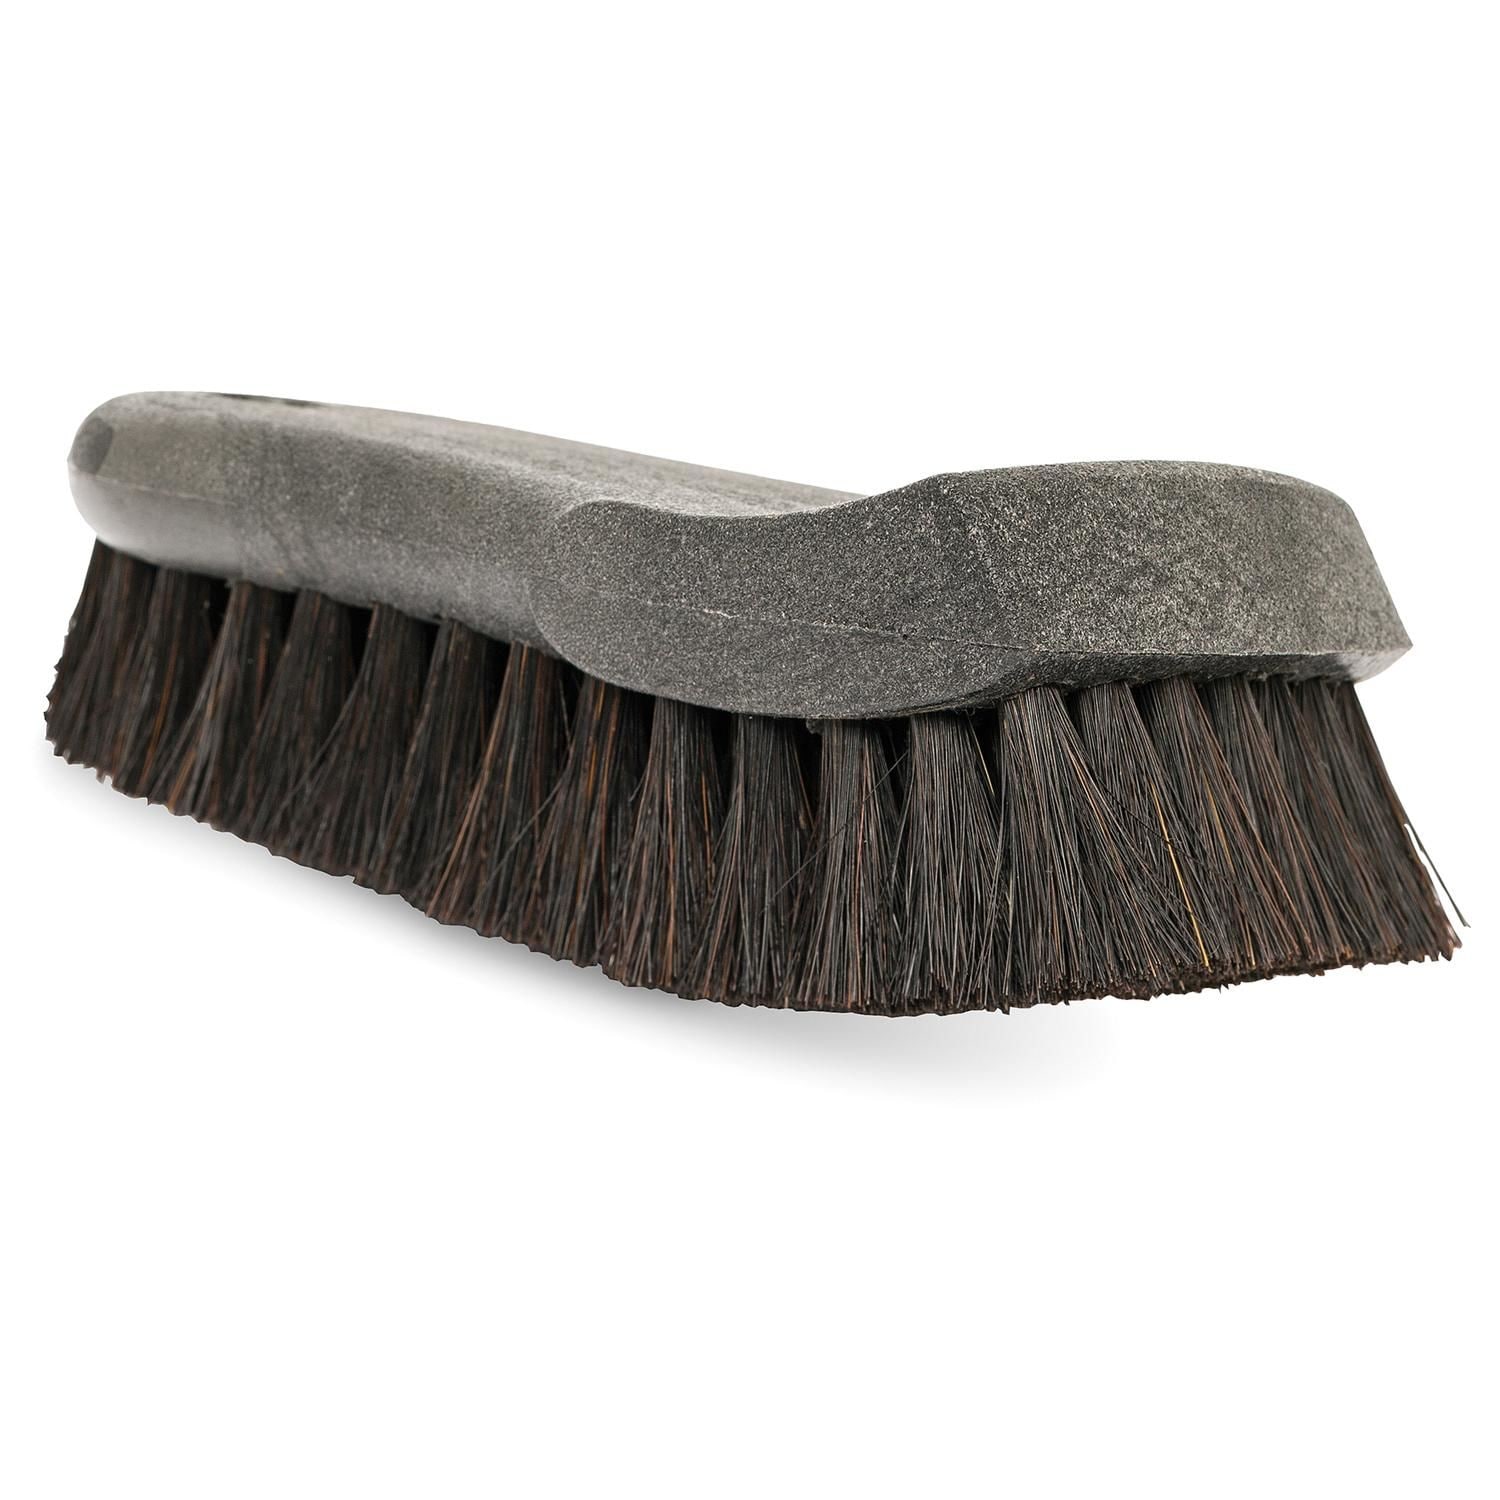 Chemical Guys ACCS96 Premium Select Horse Hair Interior Cleaning Brush